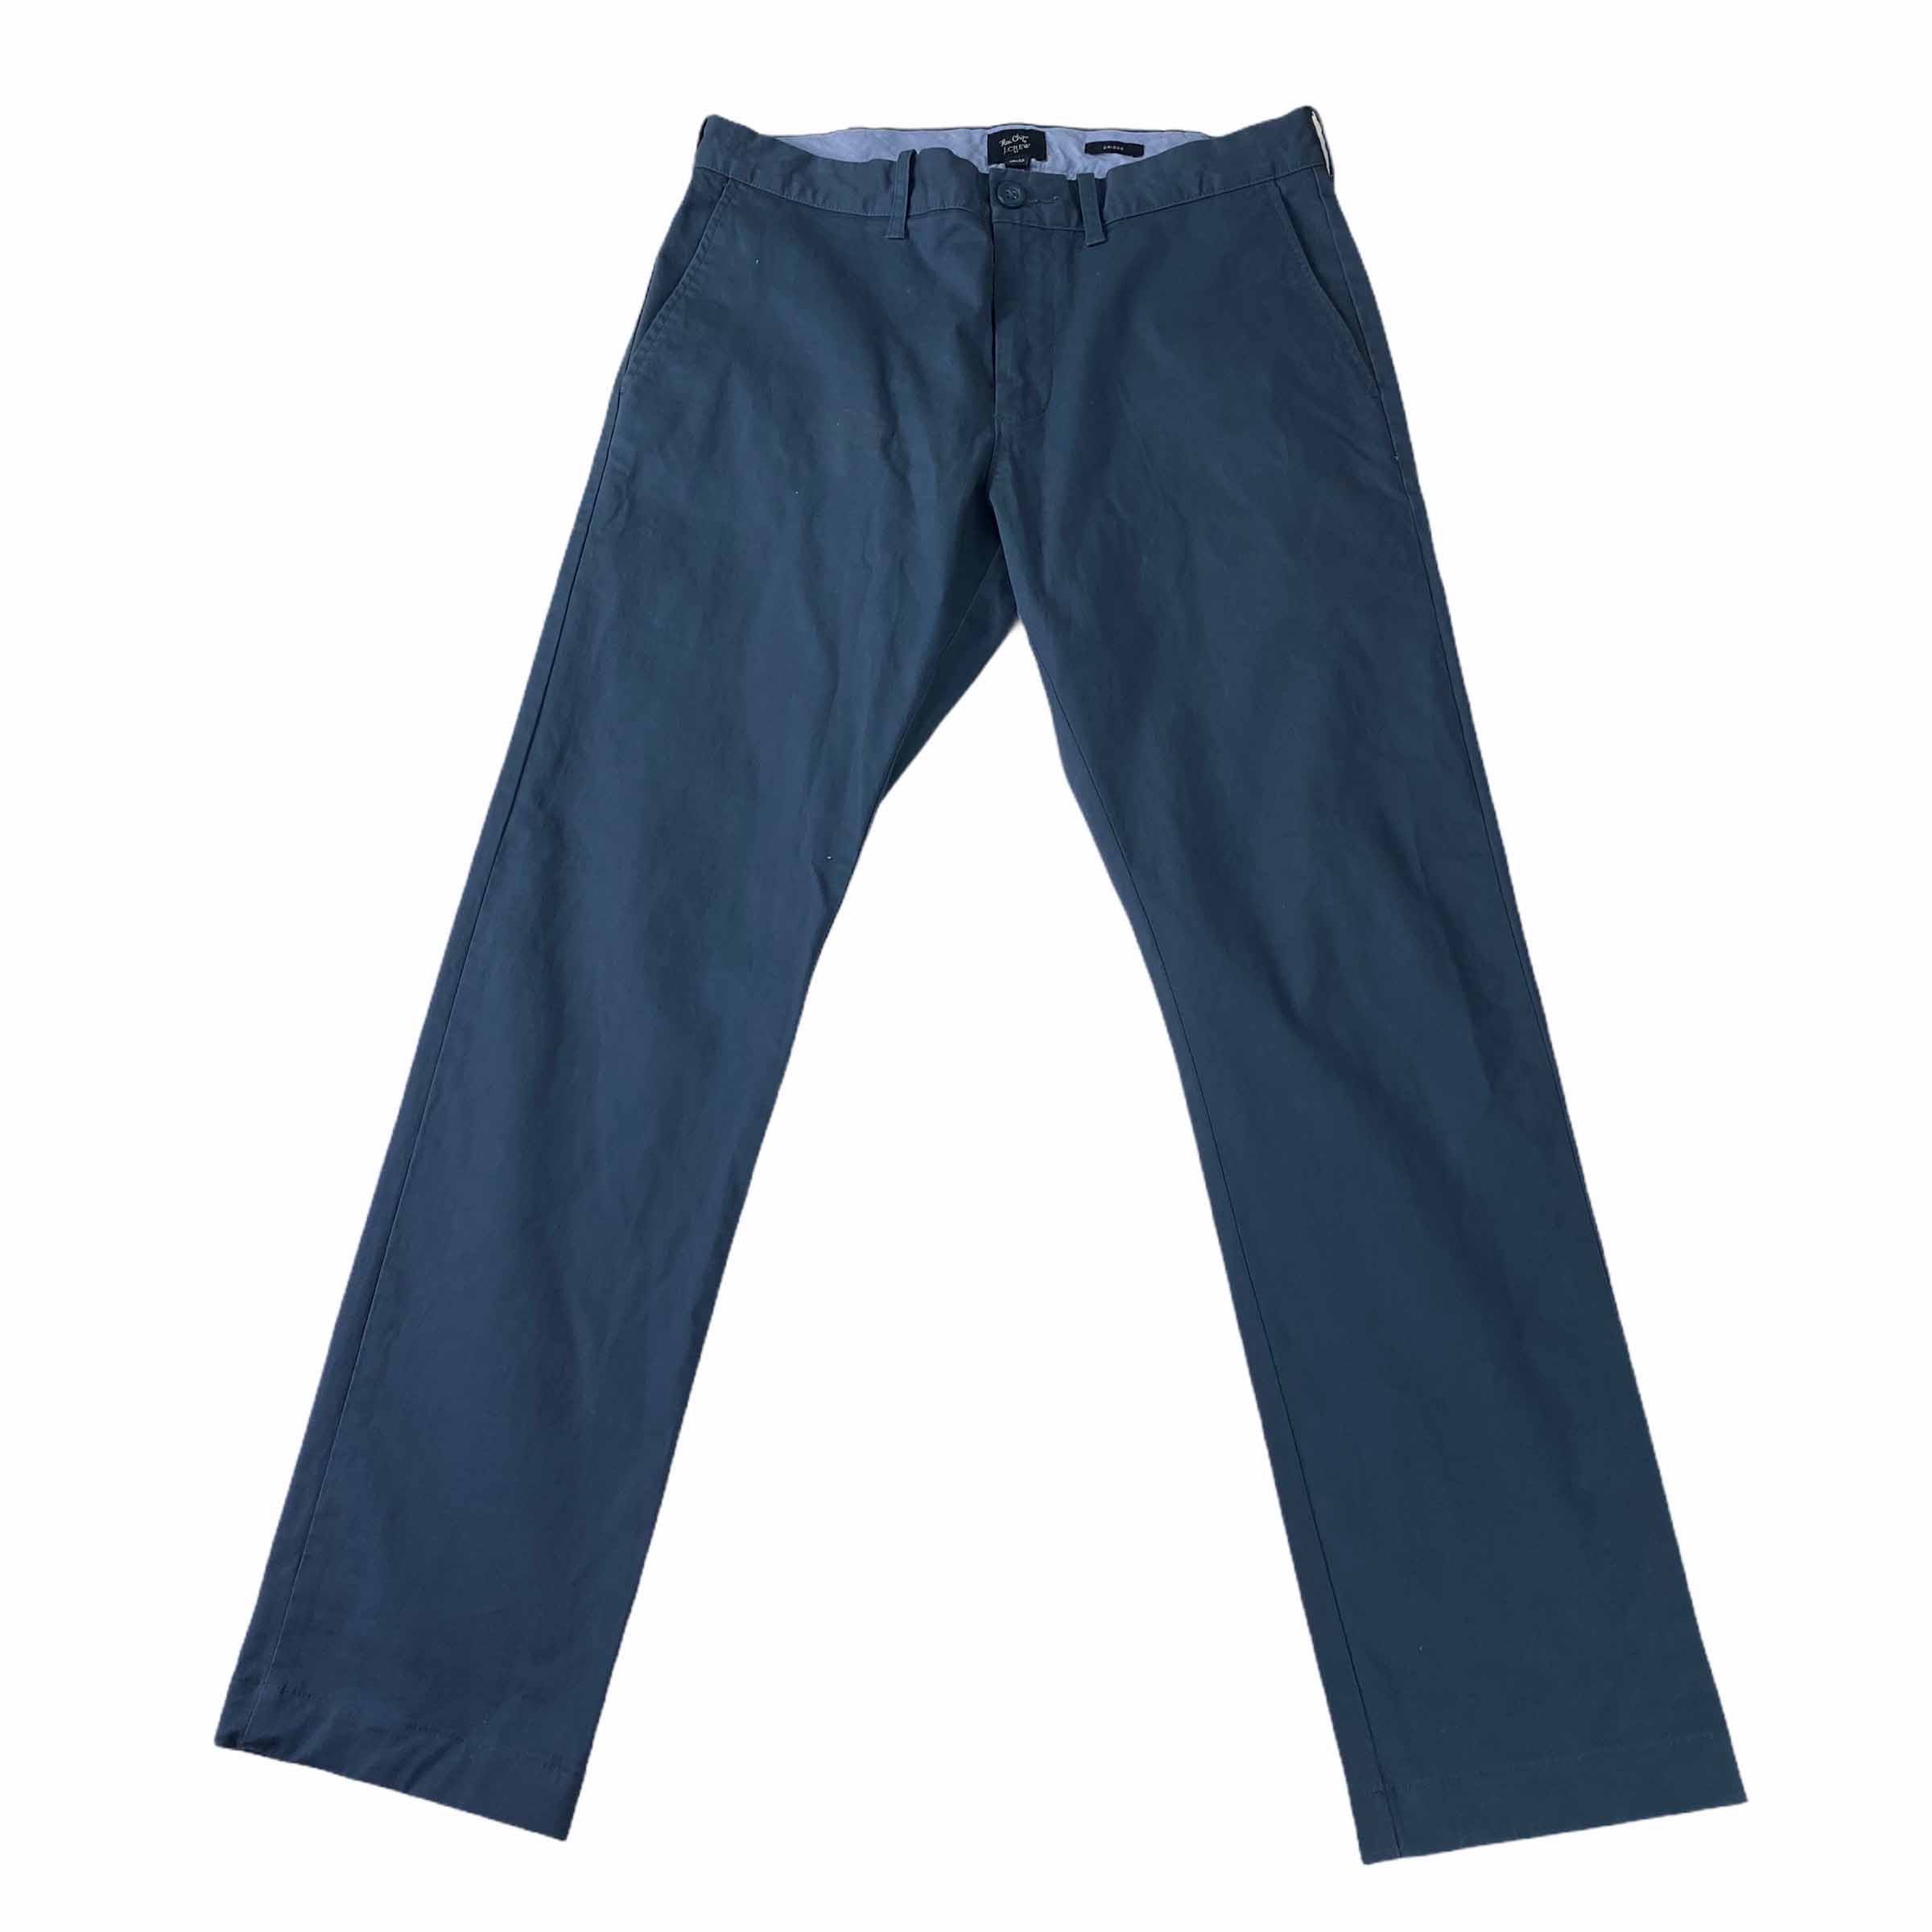 [J.Crew] Navy Cotton Pants - Size 29/32